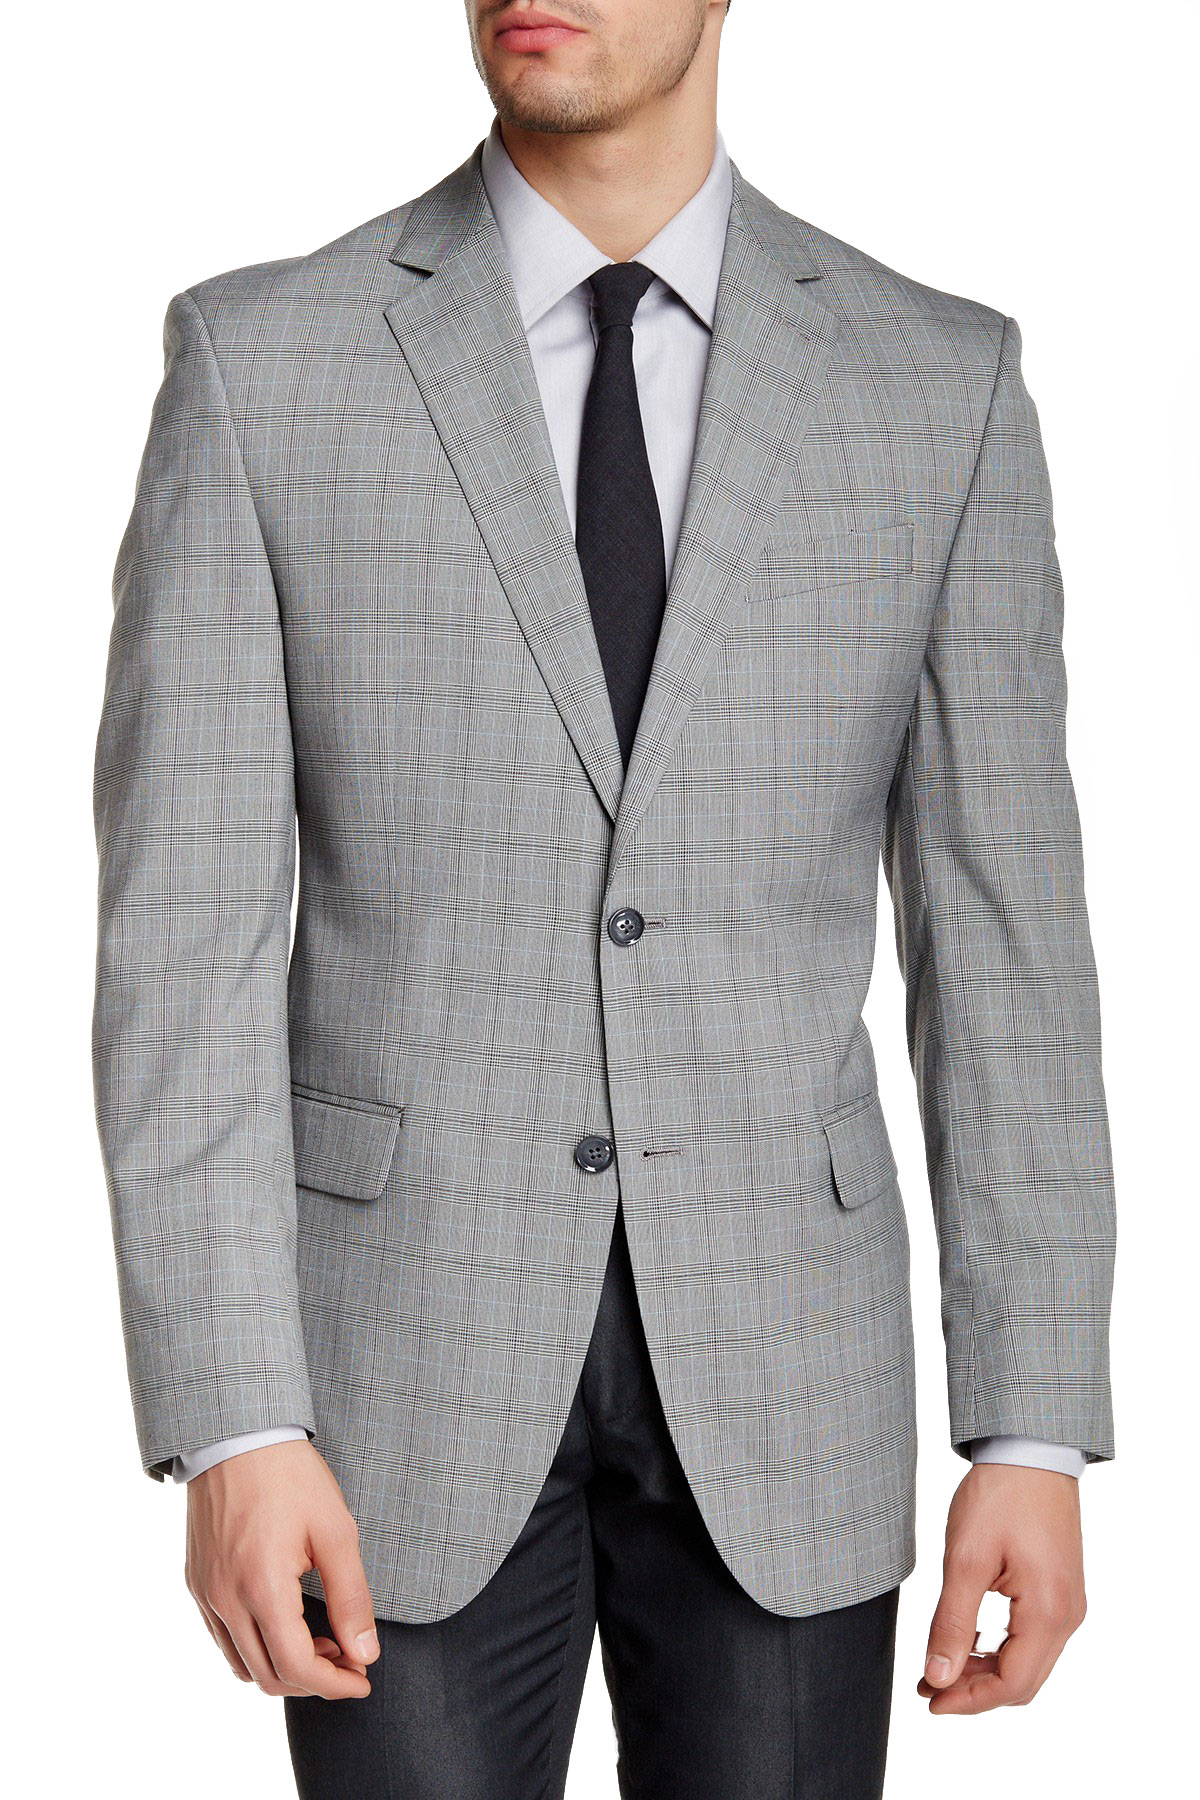 Perry Ellis Men's Grey Plaid Modern Fit Two-Button Suit Jacket $260 NEW ...